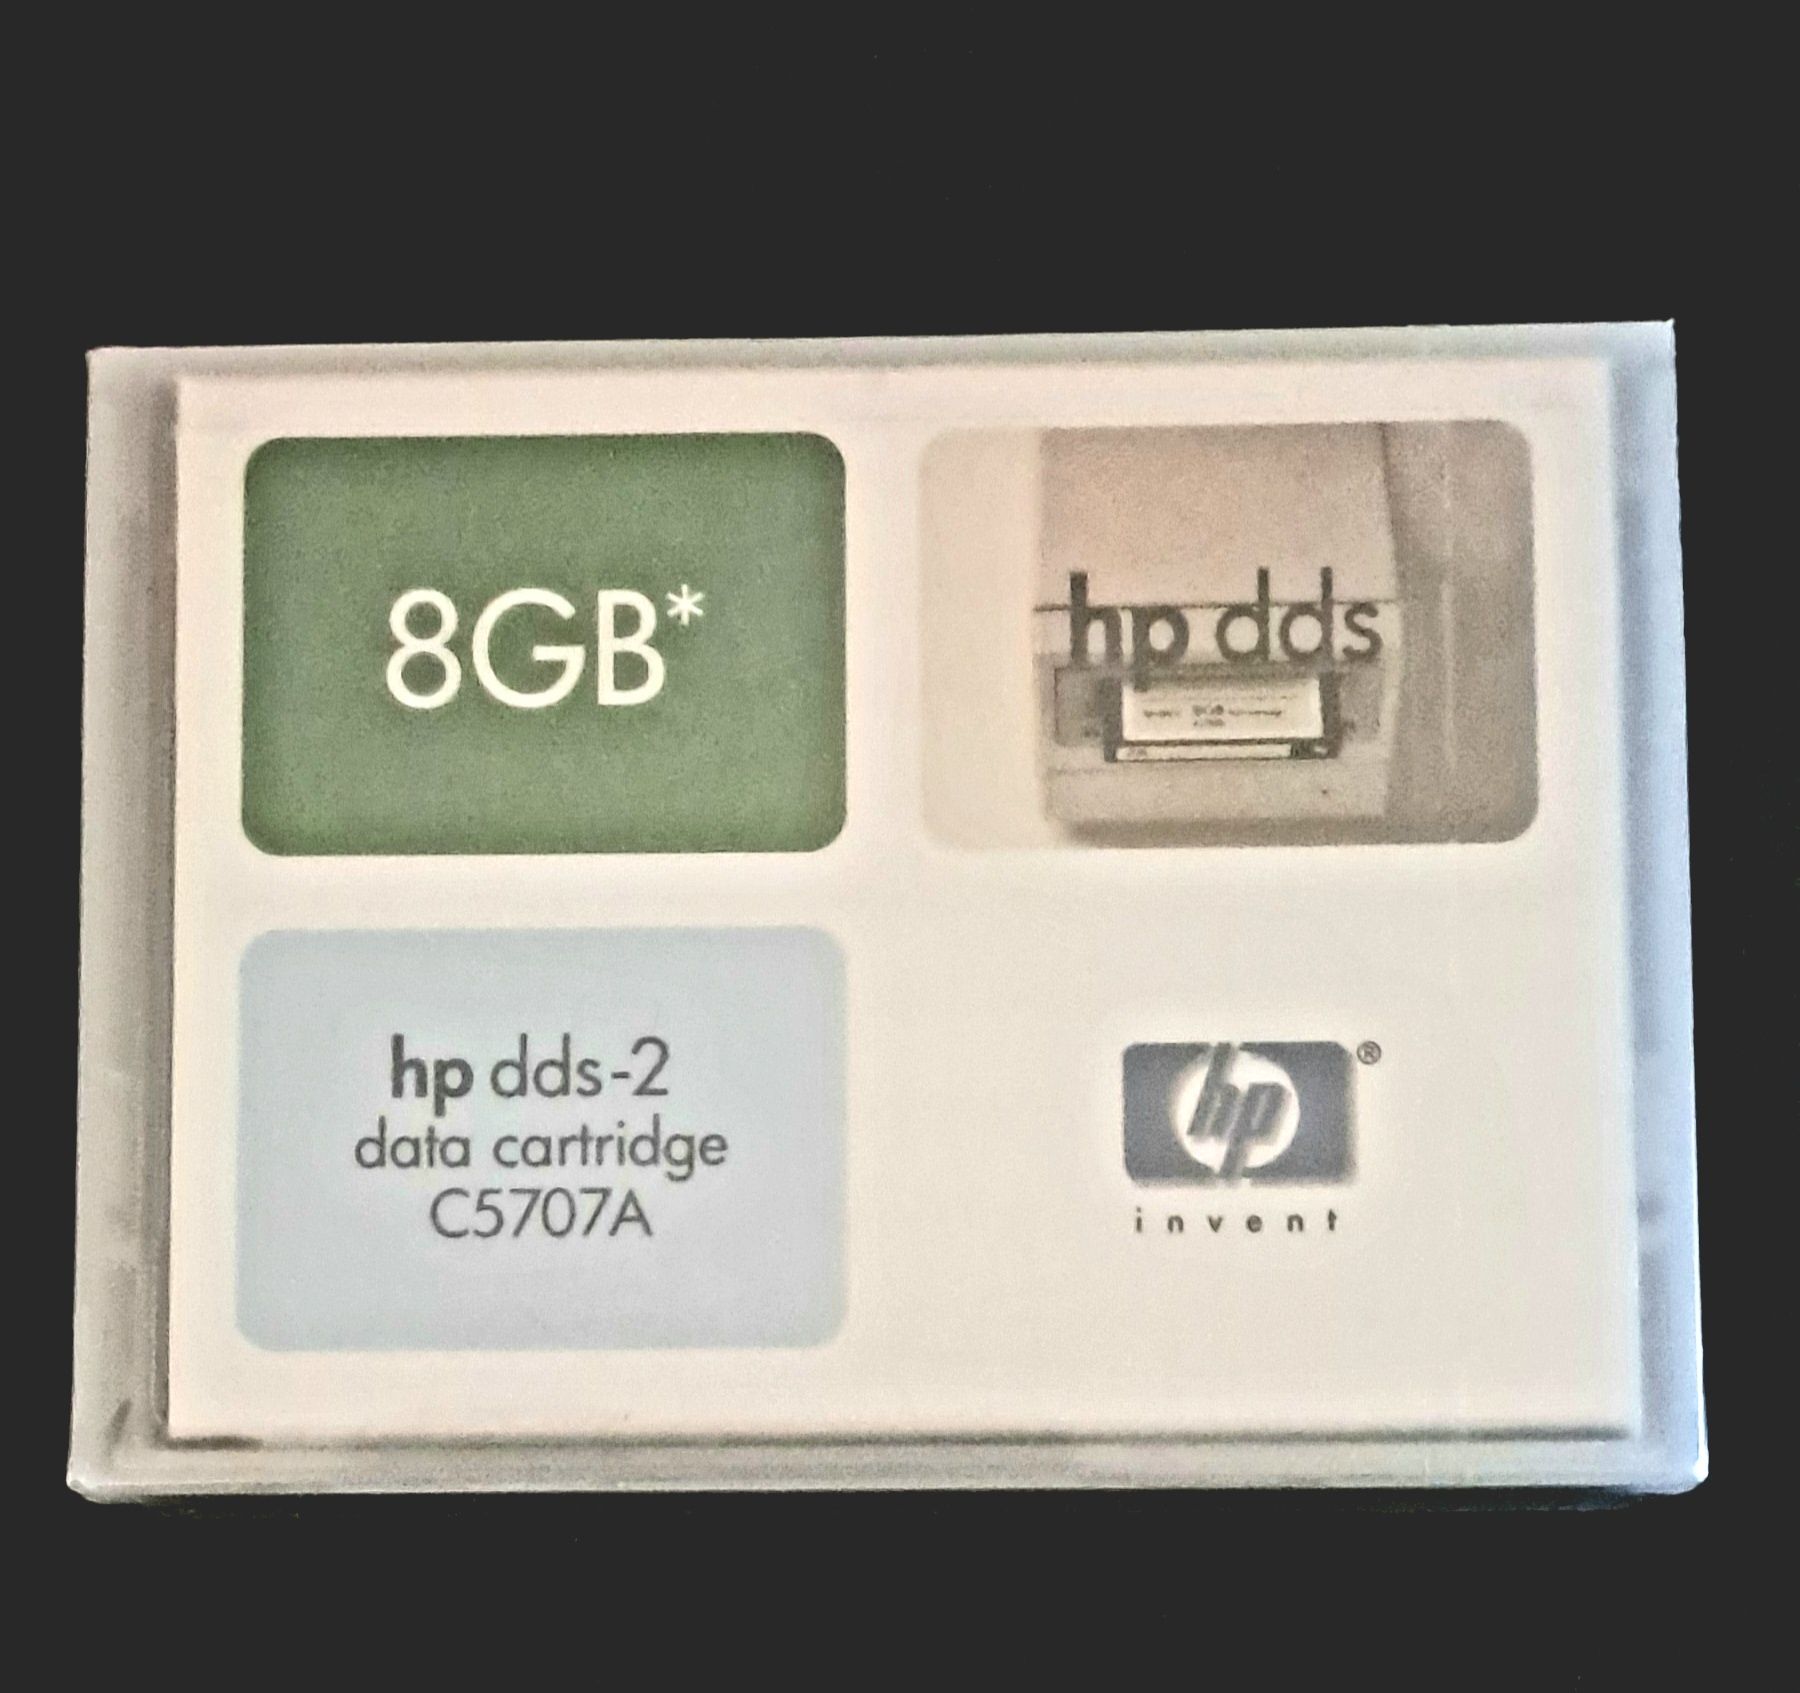 HP dds-2 Data Cartridge C5707A